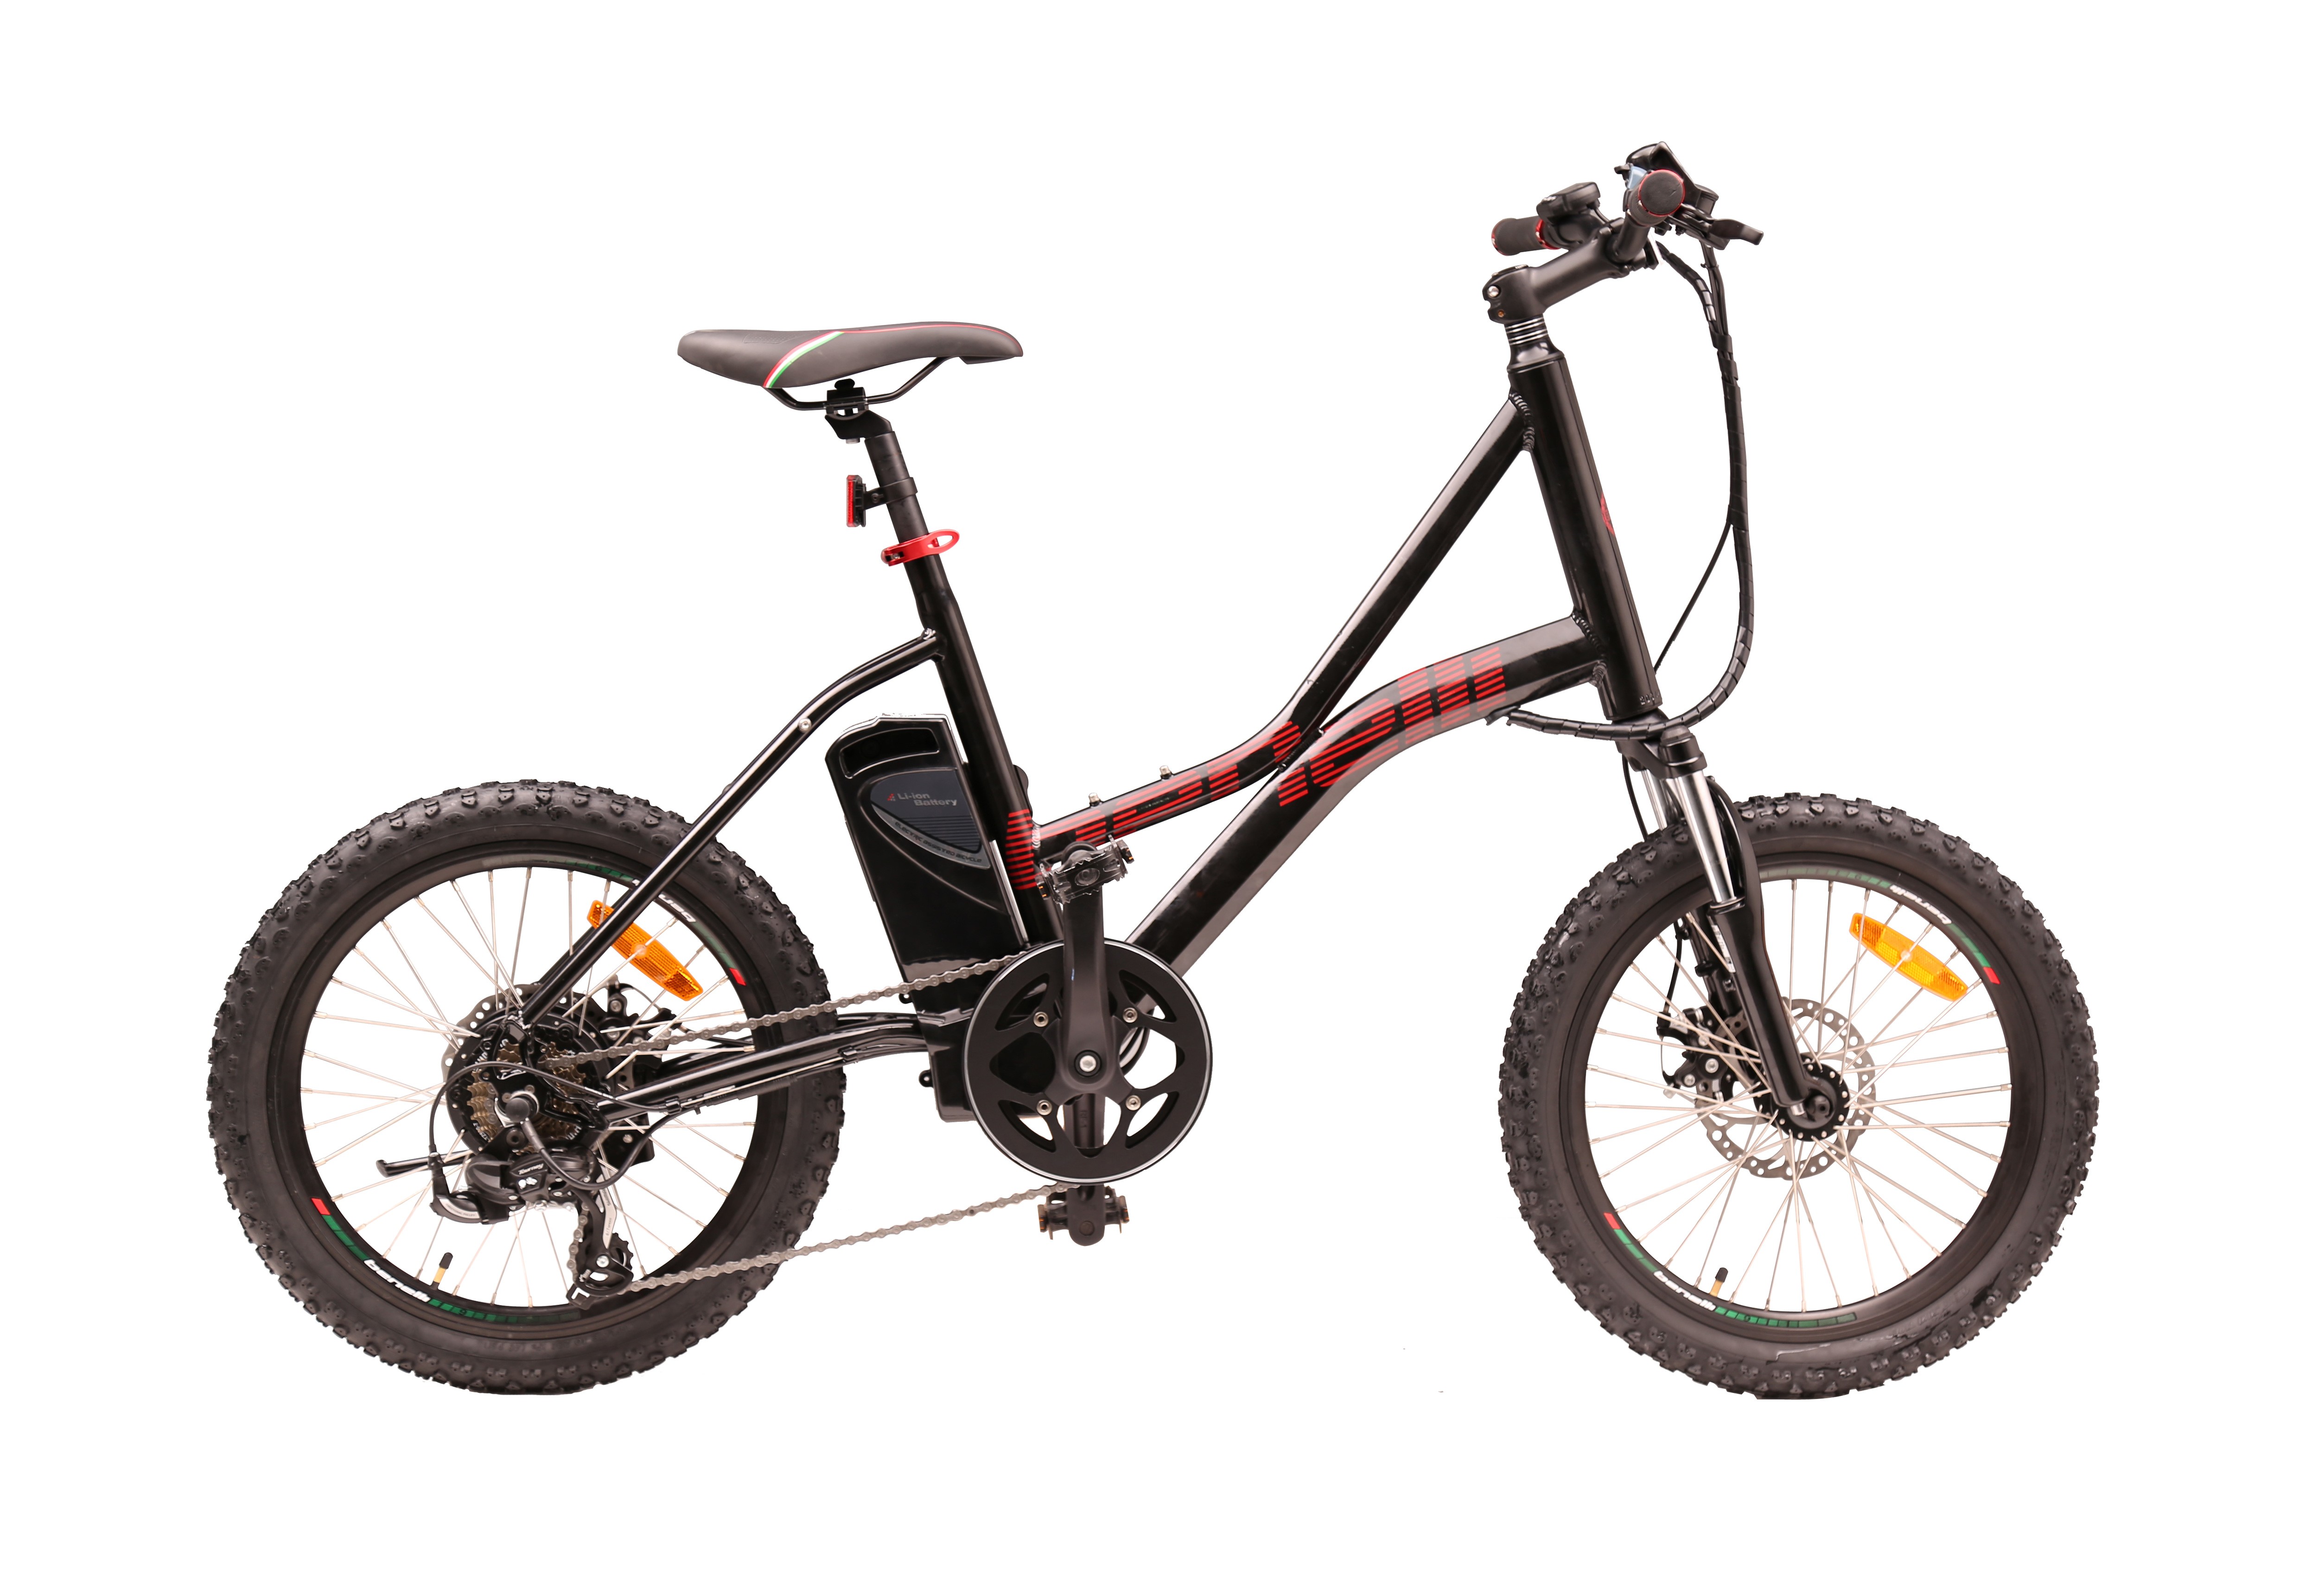 Benelli E-MTB Linker Sport 20 E-Bike/Electric Bicycle $499